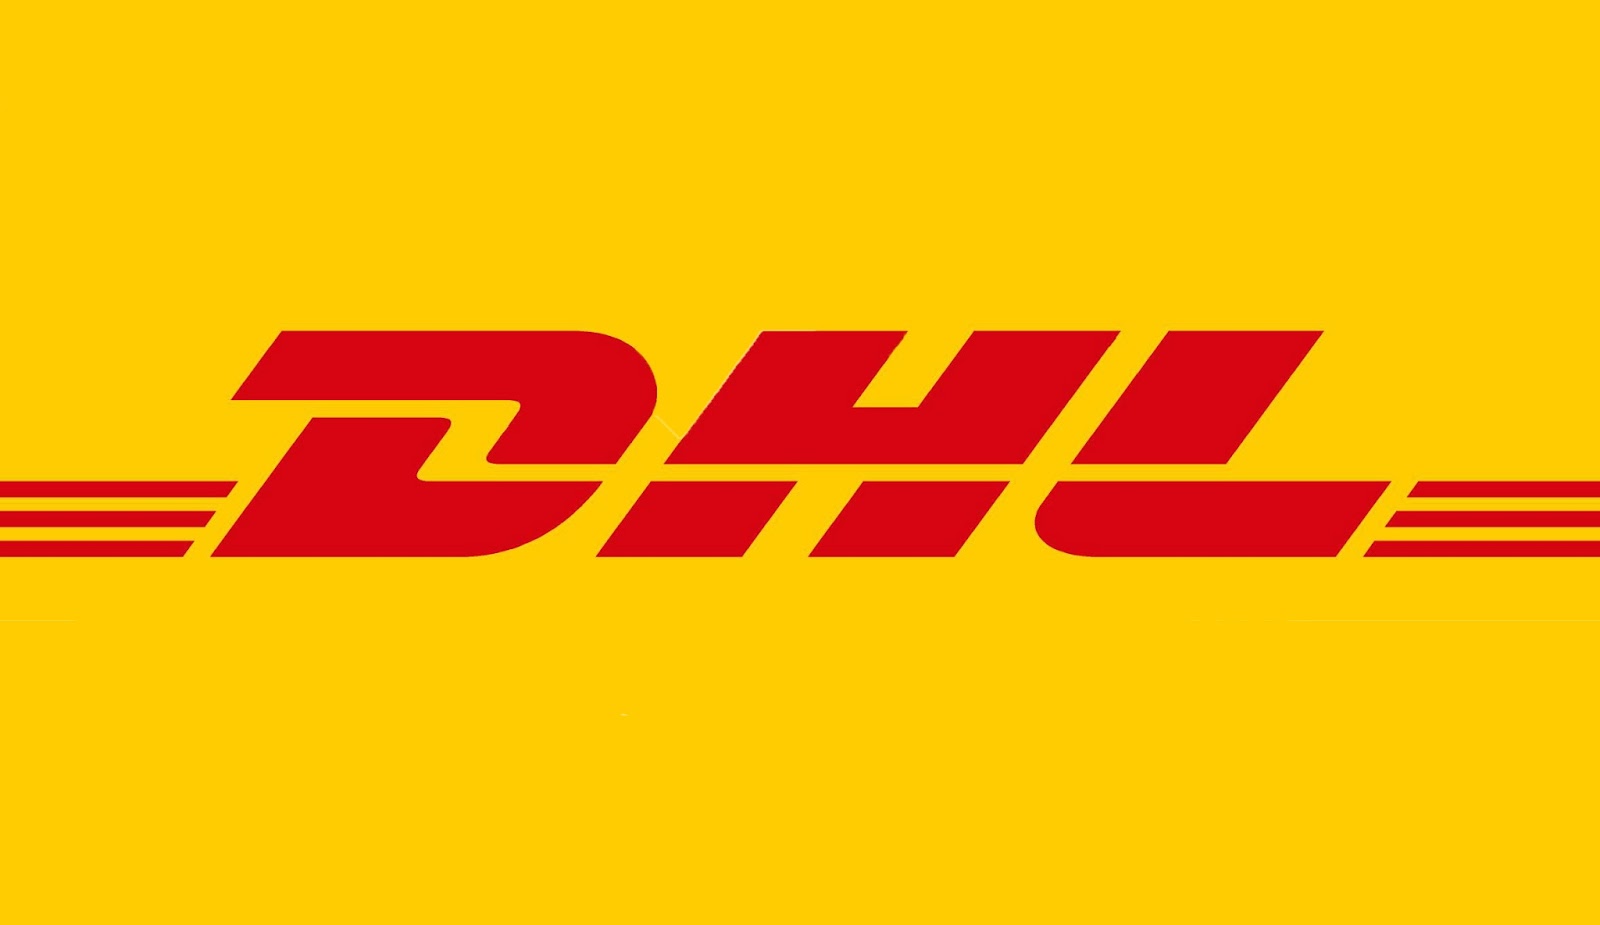 dhl_logo images.jpg